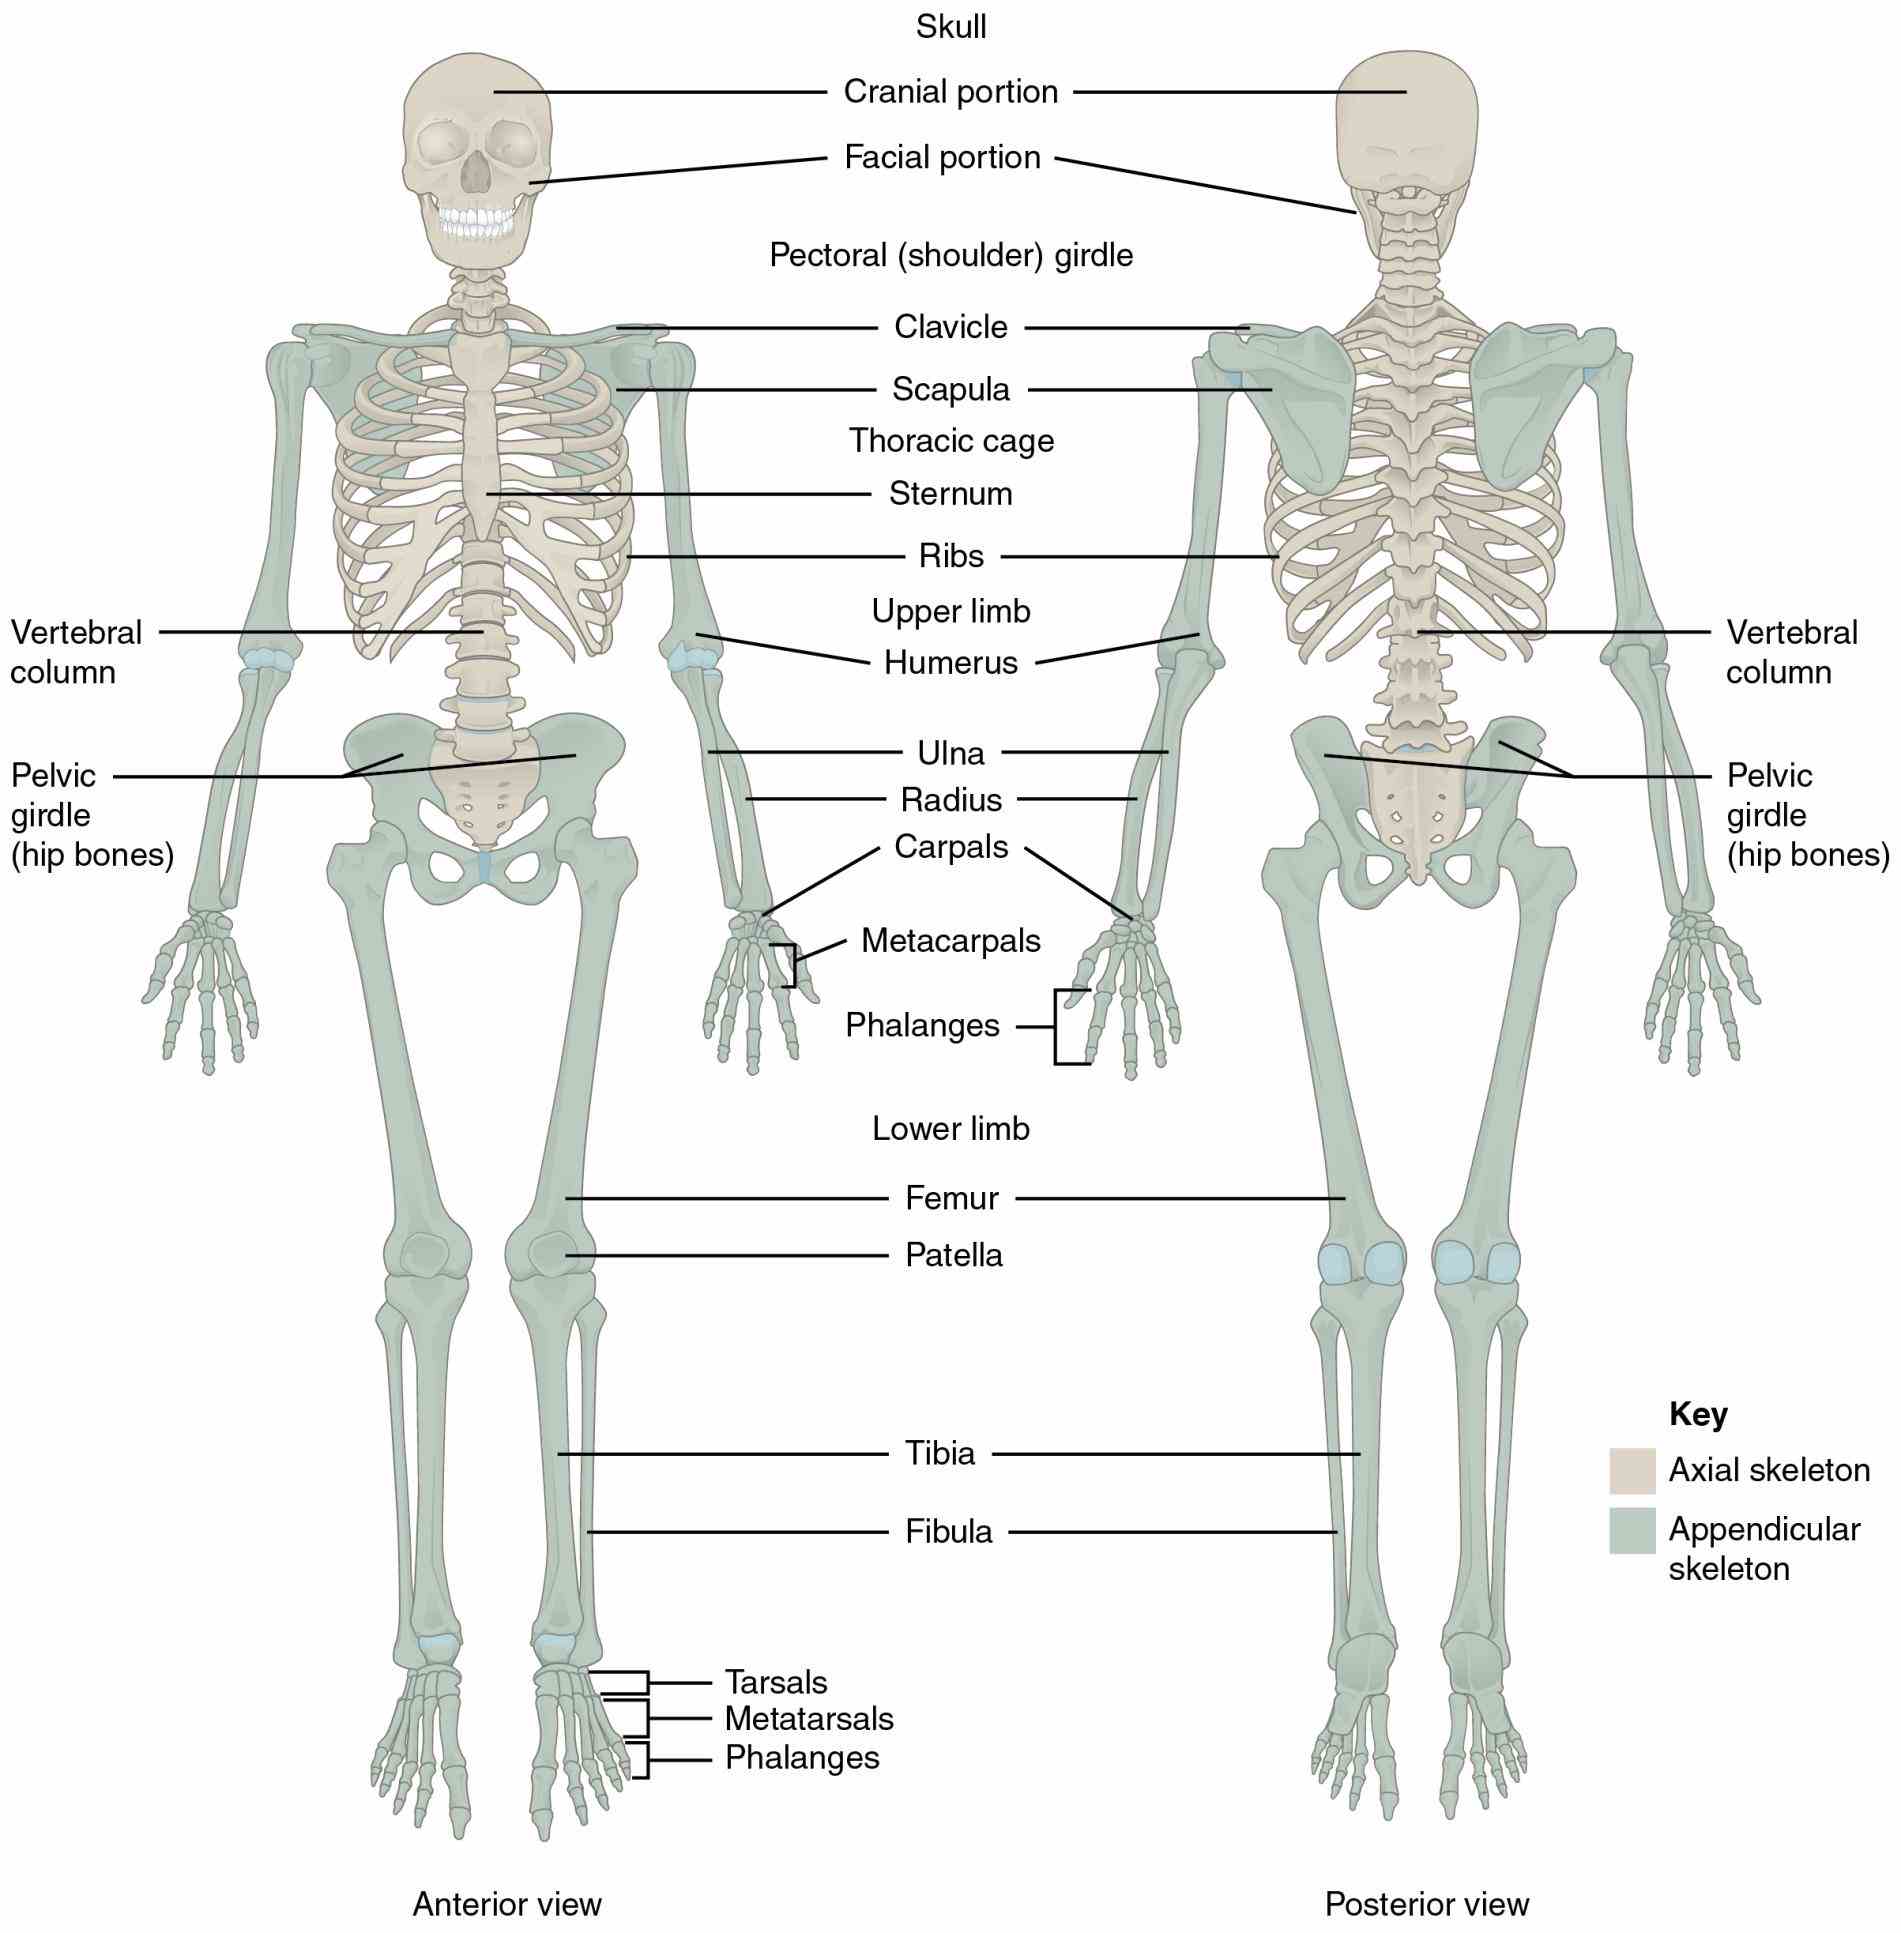 Major Bones Of The Human Skeleton Anatomy nov according to st louis universitys practical anatomy and surgical education center